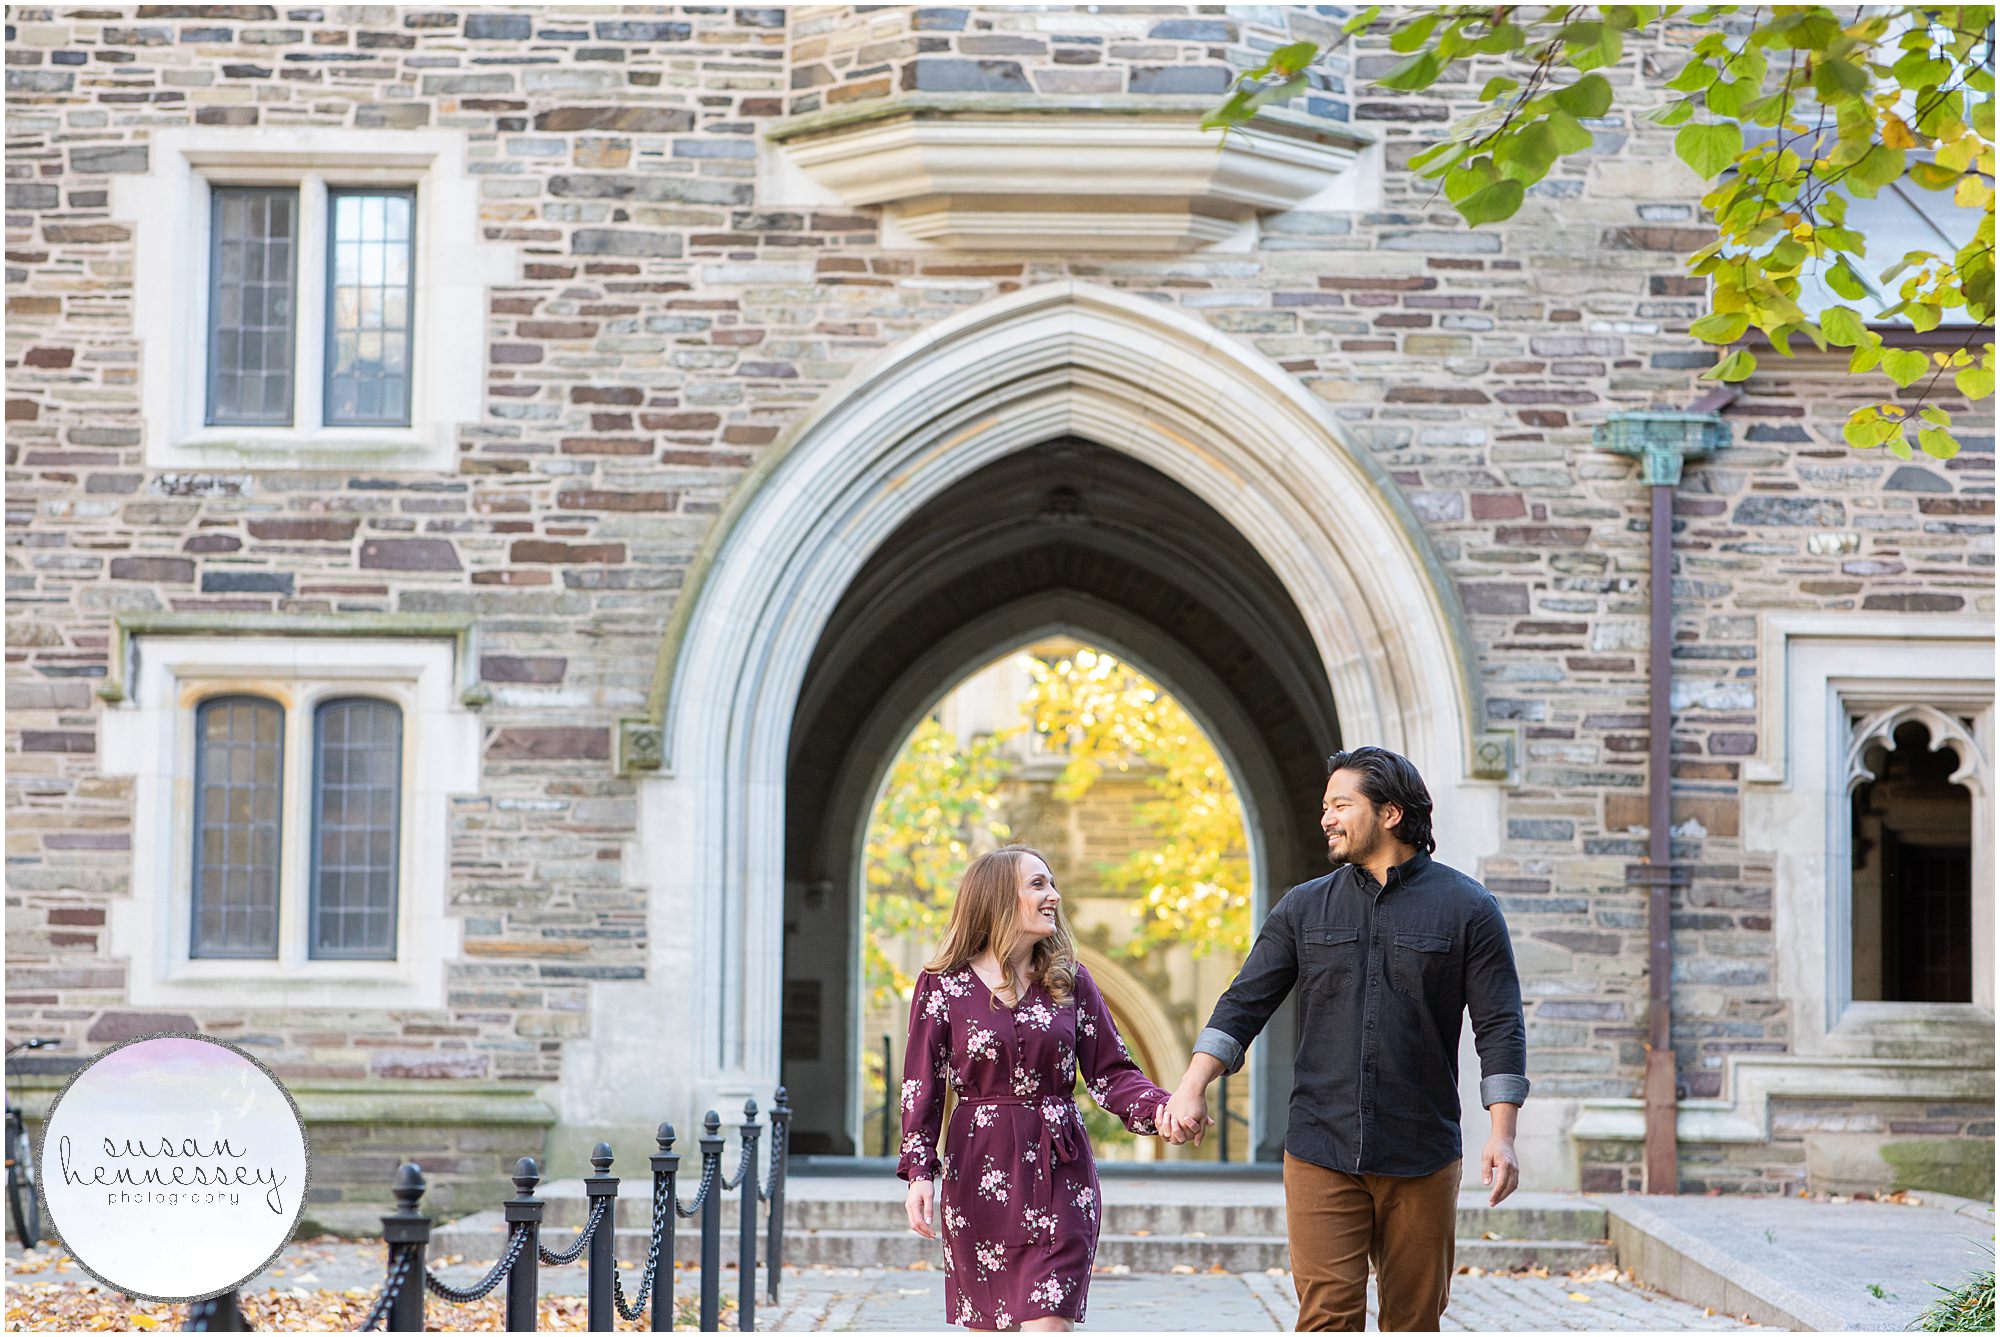 A happily engaged couple at Princeton University